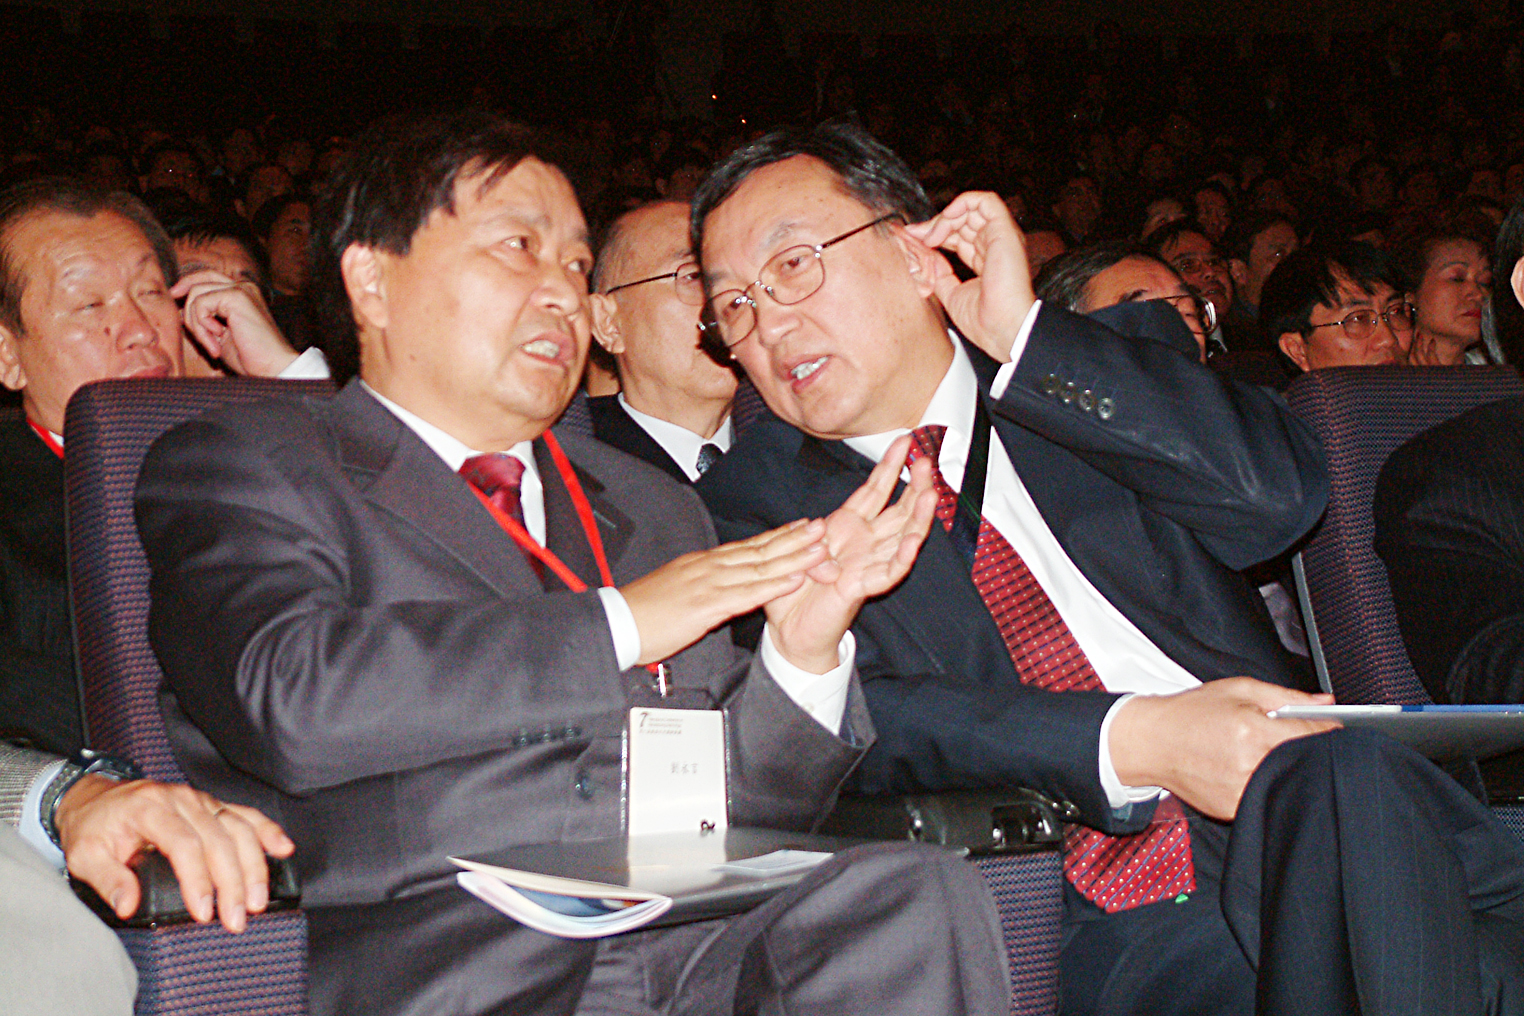 The Chairman and Mr. Chuanzhe Liu